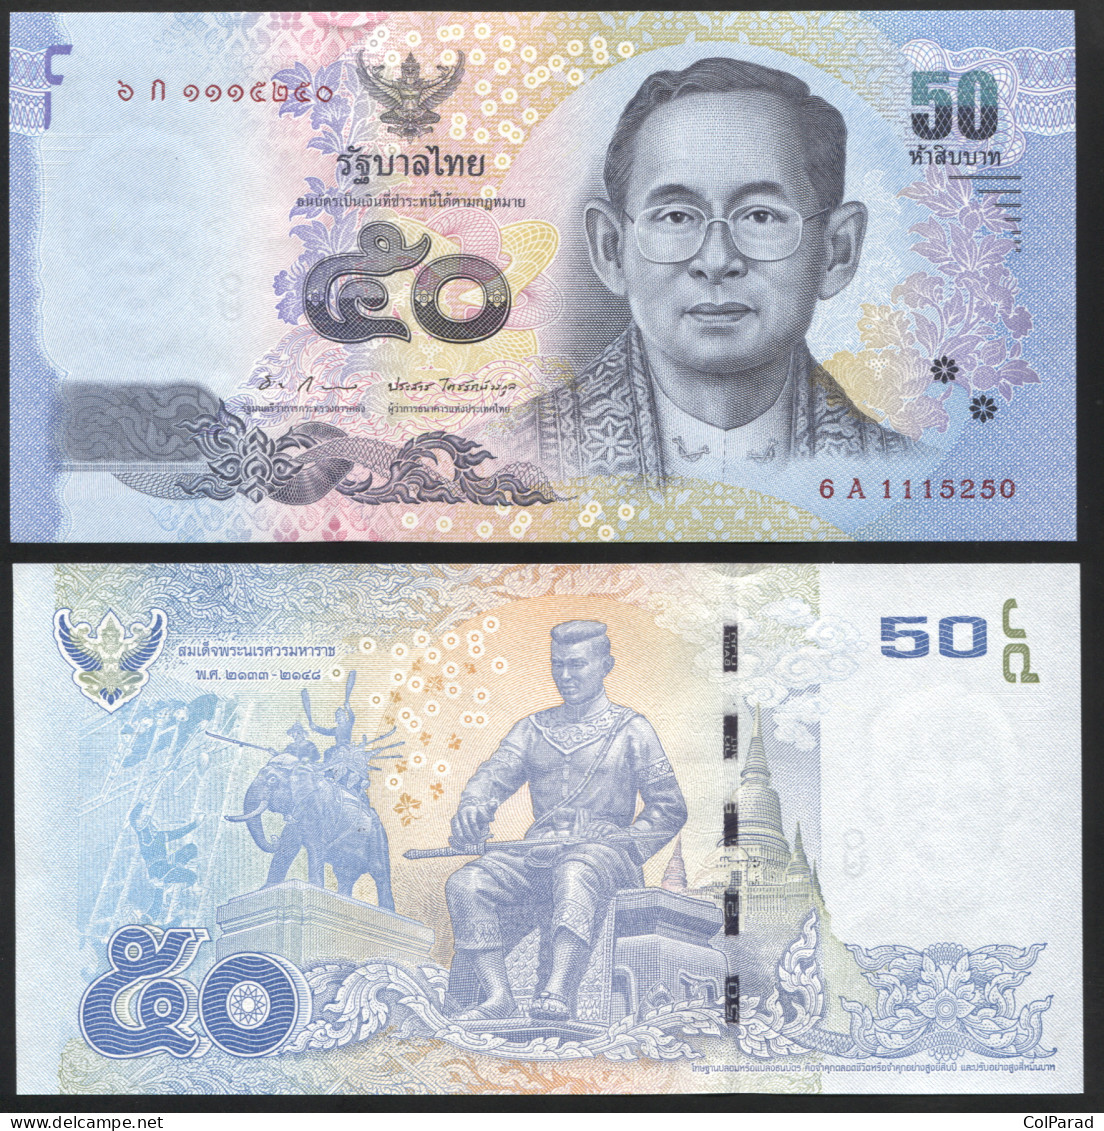 THAILAND 50 BAHT - ND (2012) - Unc - P.119 Paper Banknote - Tailandia